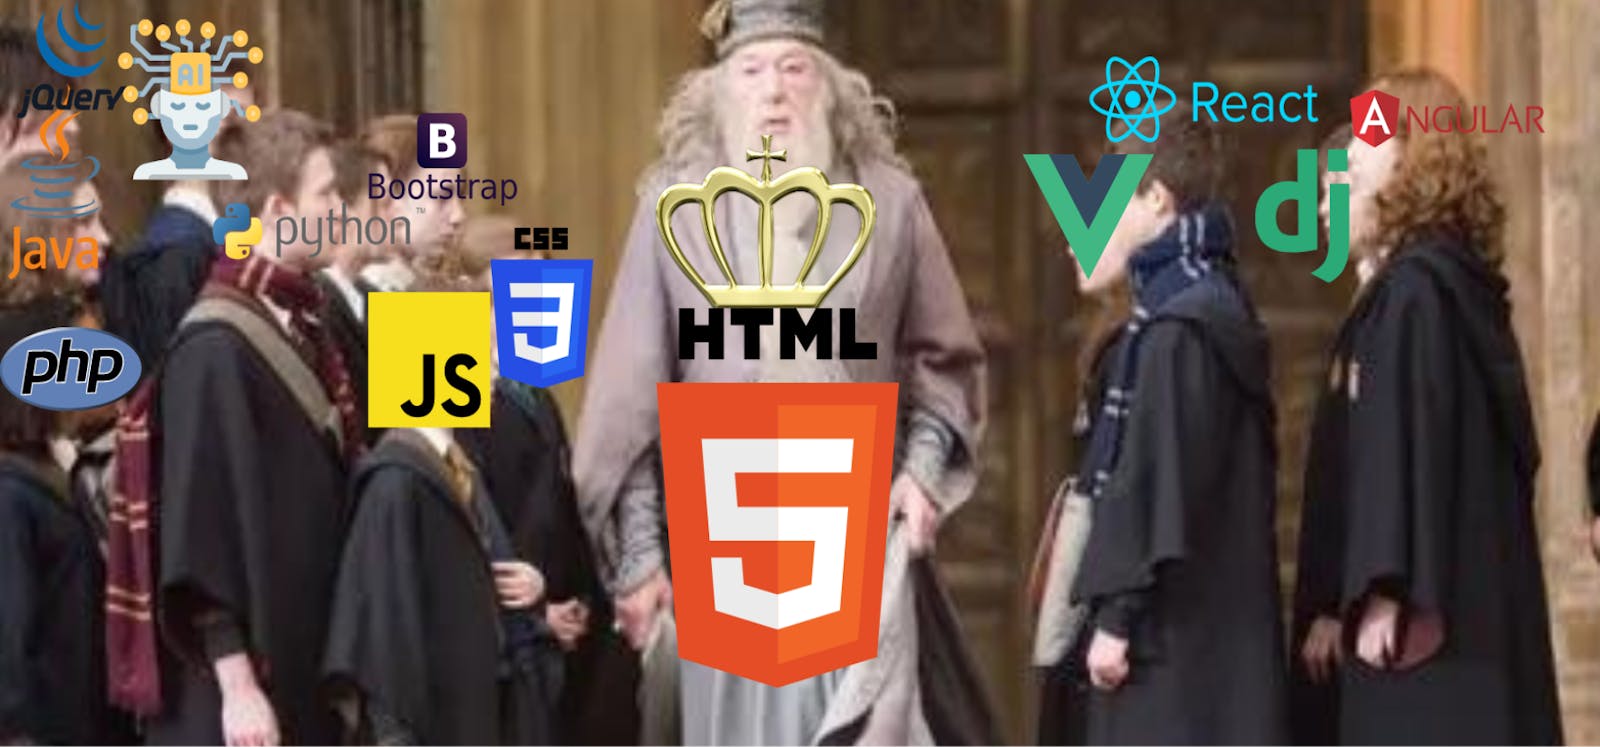 HTML, the "Headmaster" of  Web.